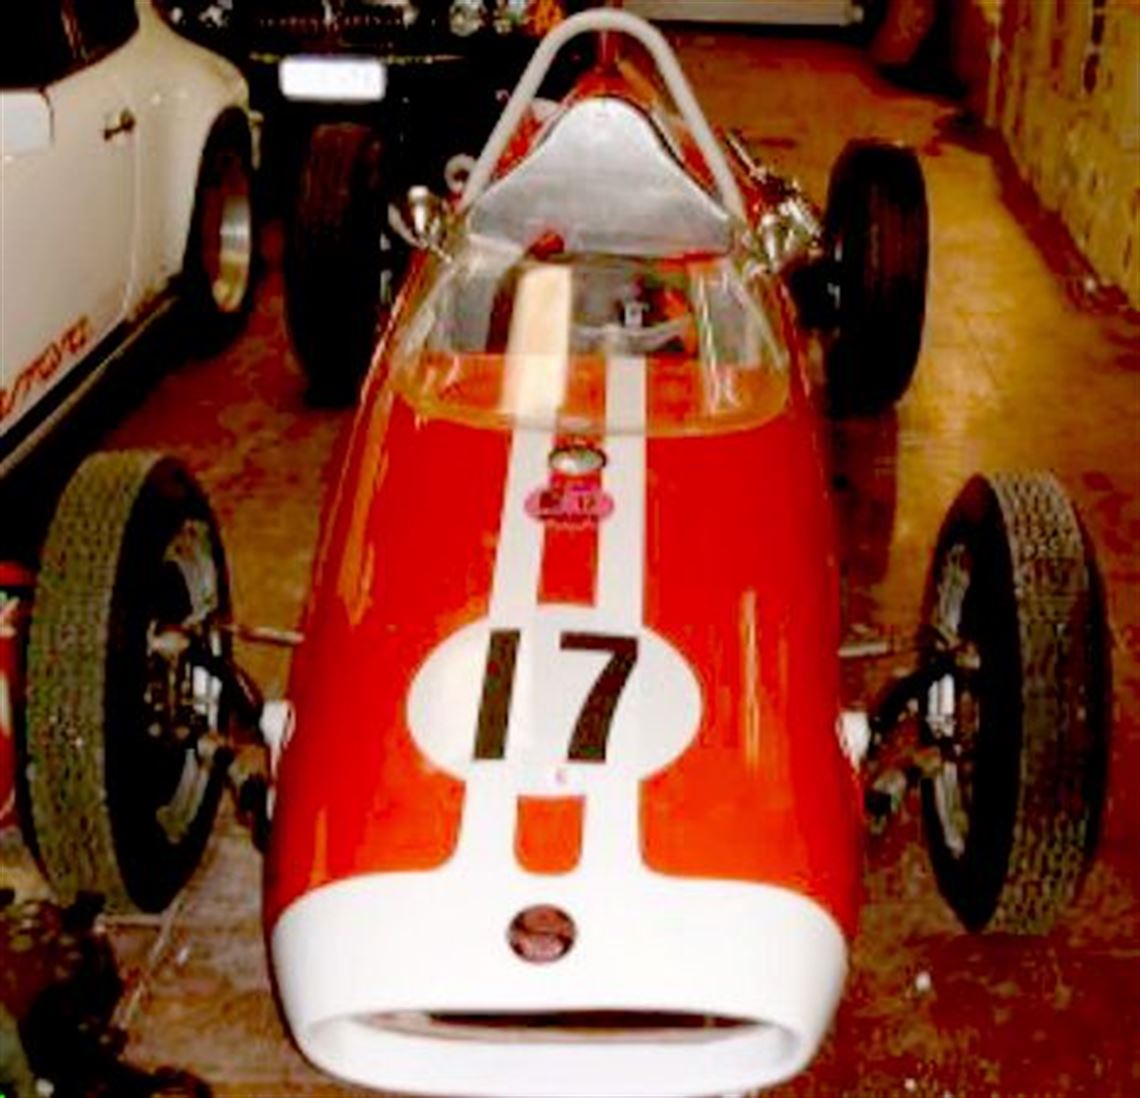 1960-sauter-formula-junior